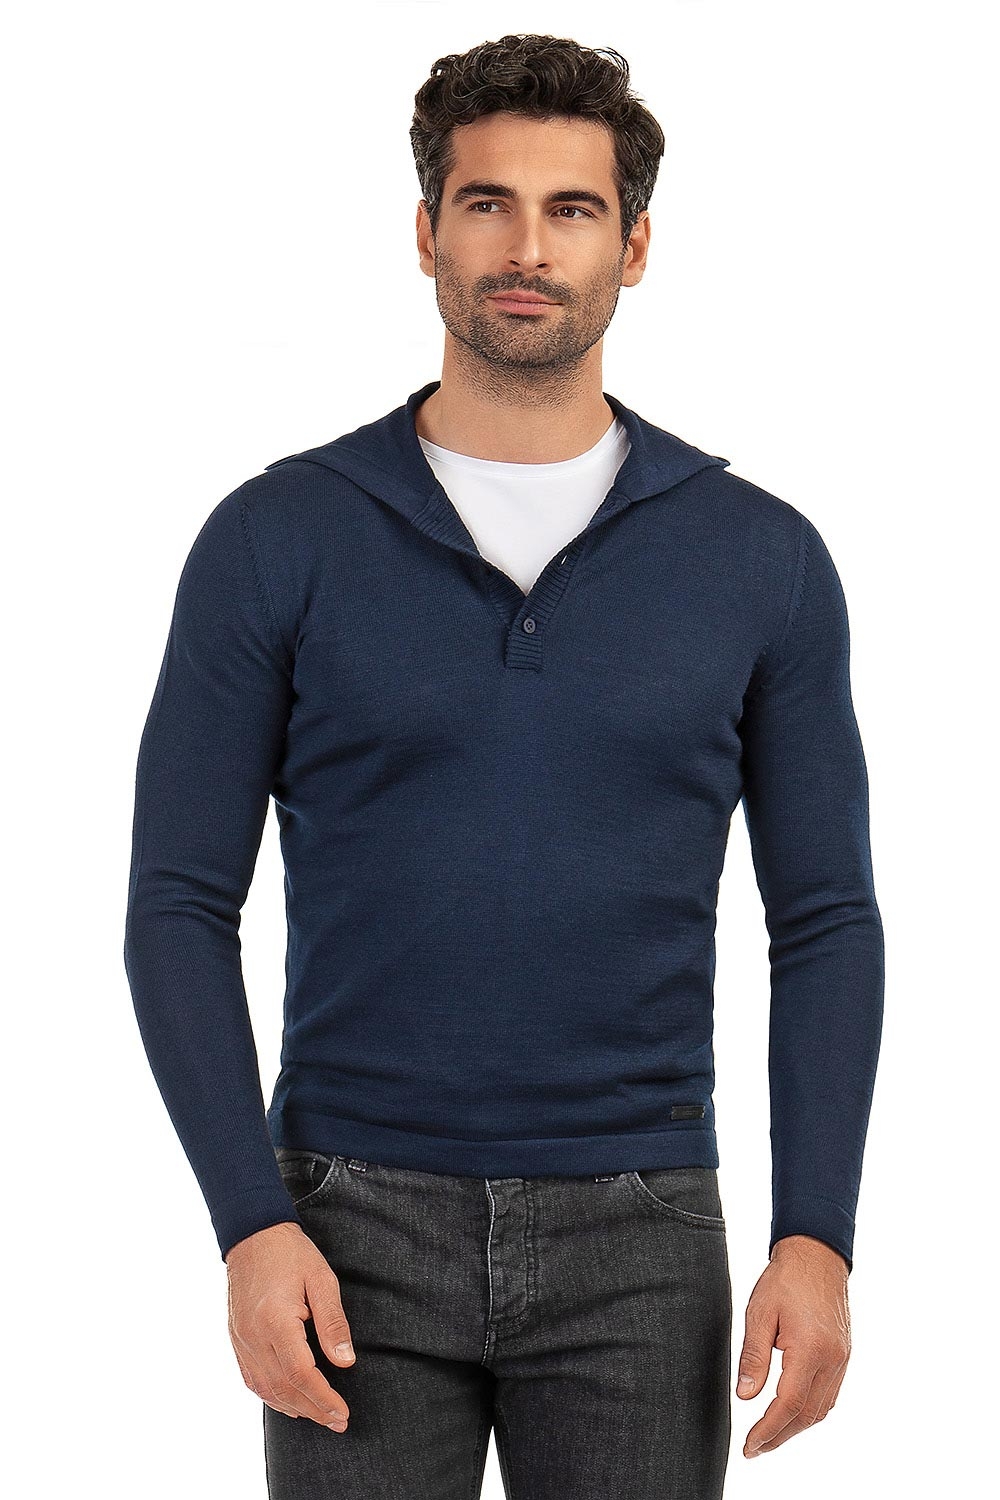 Slim body navy sweater 0